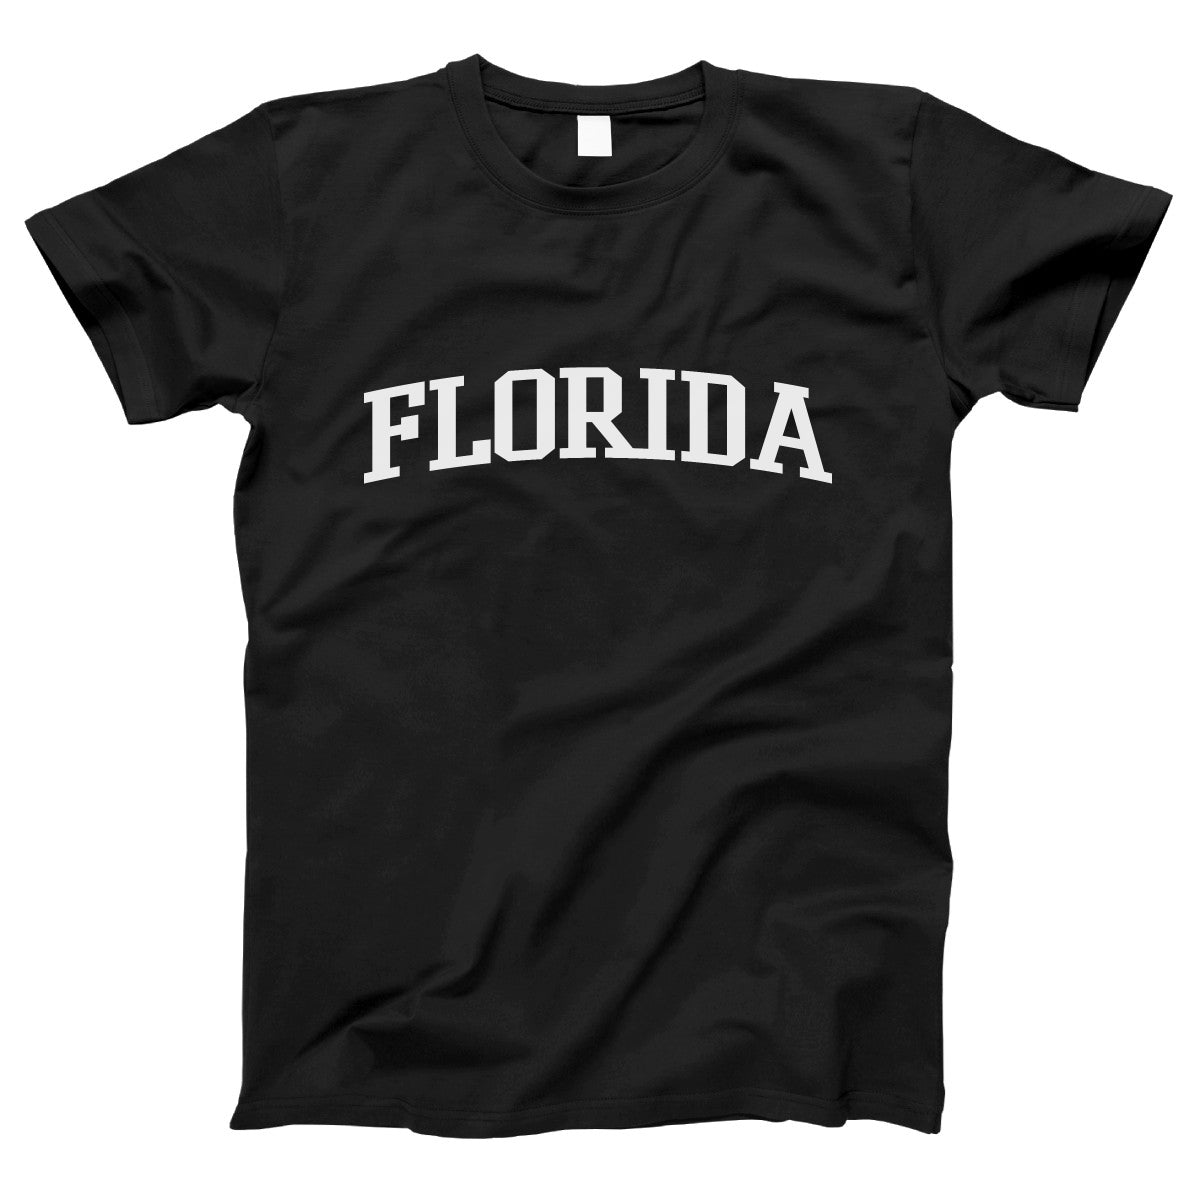 Florida Women's T-shirt